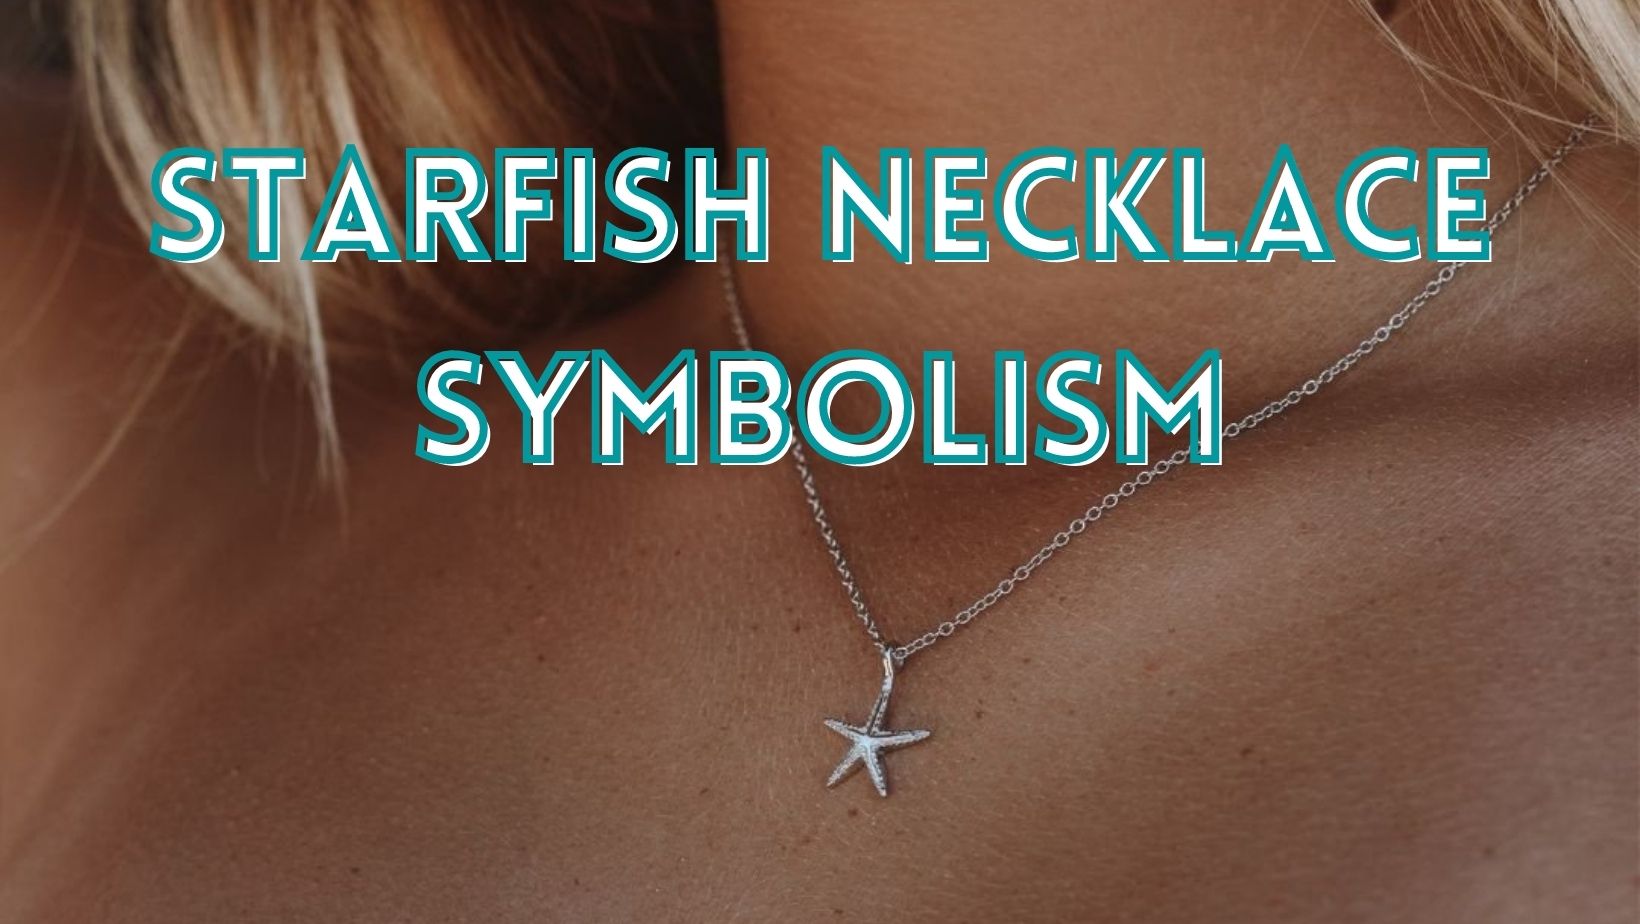 Starfish necklace symbolism